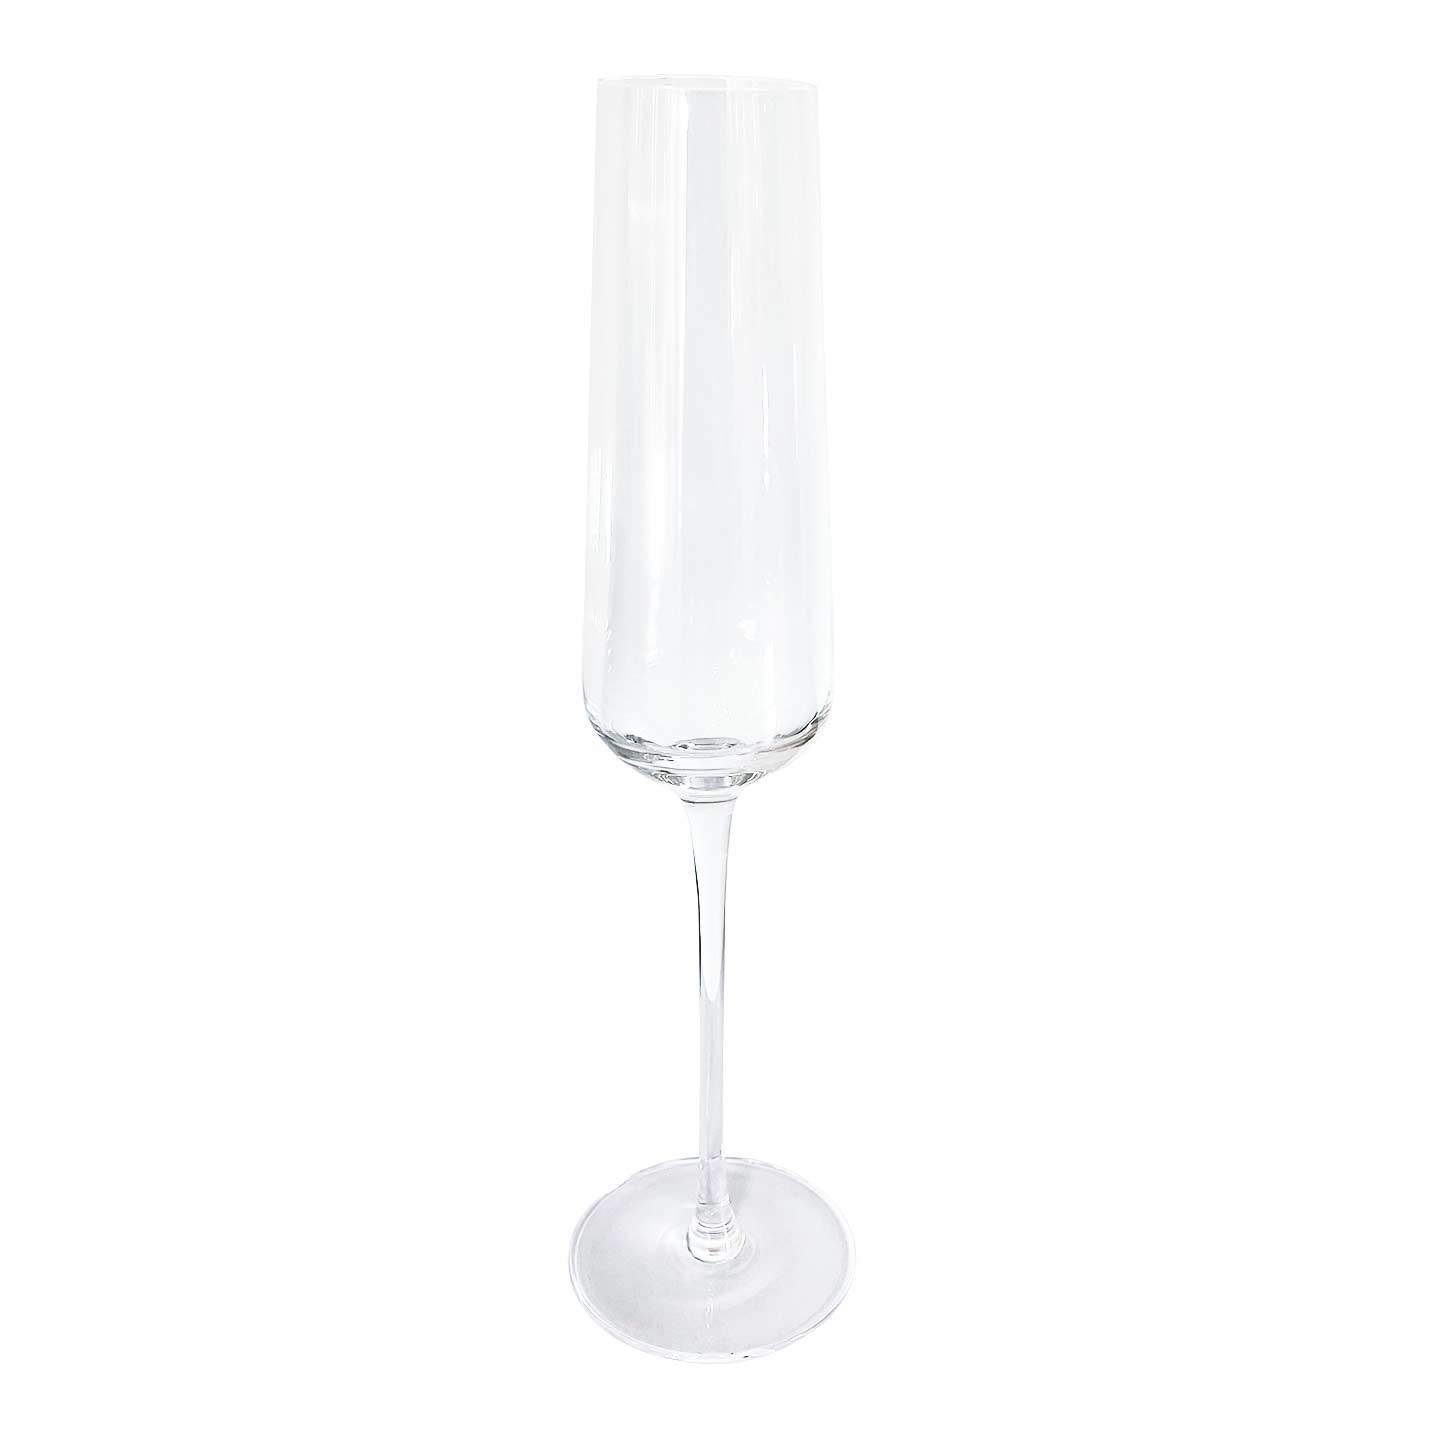 Svelte Champagne Flute Glass